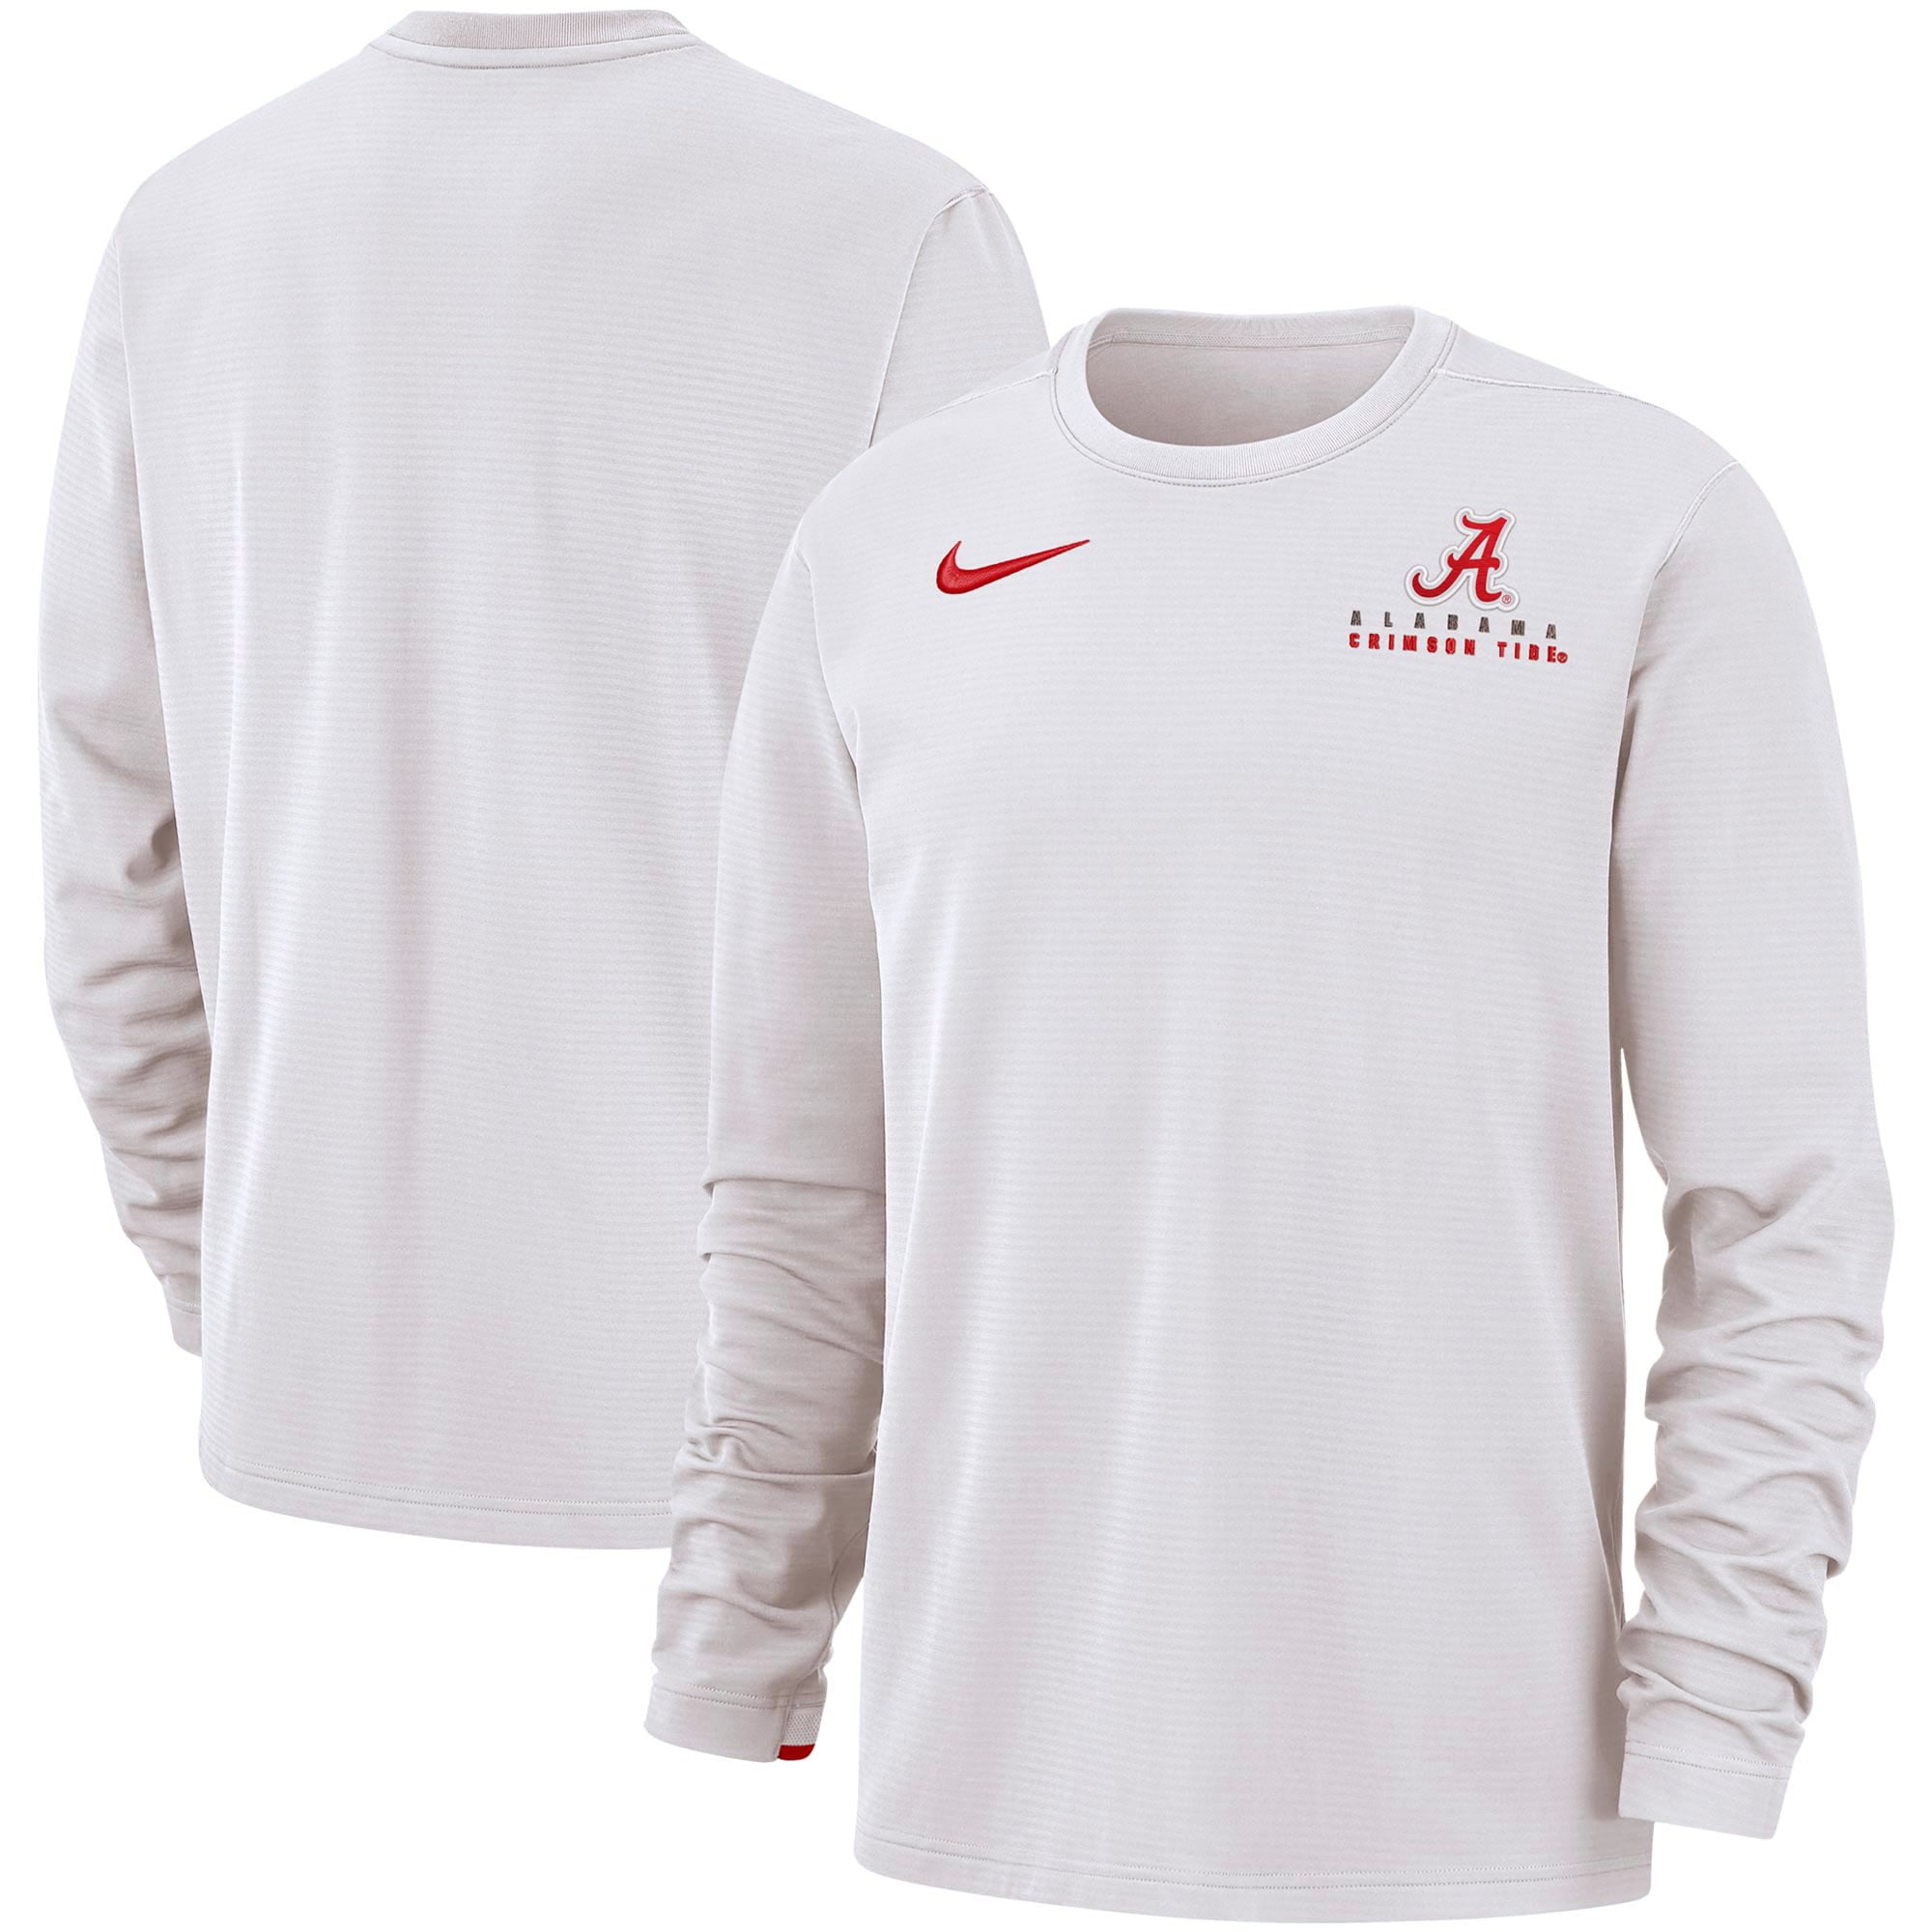 Alabama Crimson Tide Nike Performance Sweatshirt - White - Walmart.com ...